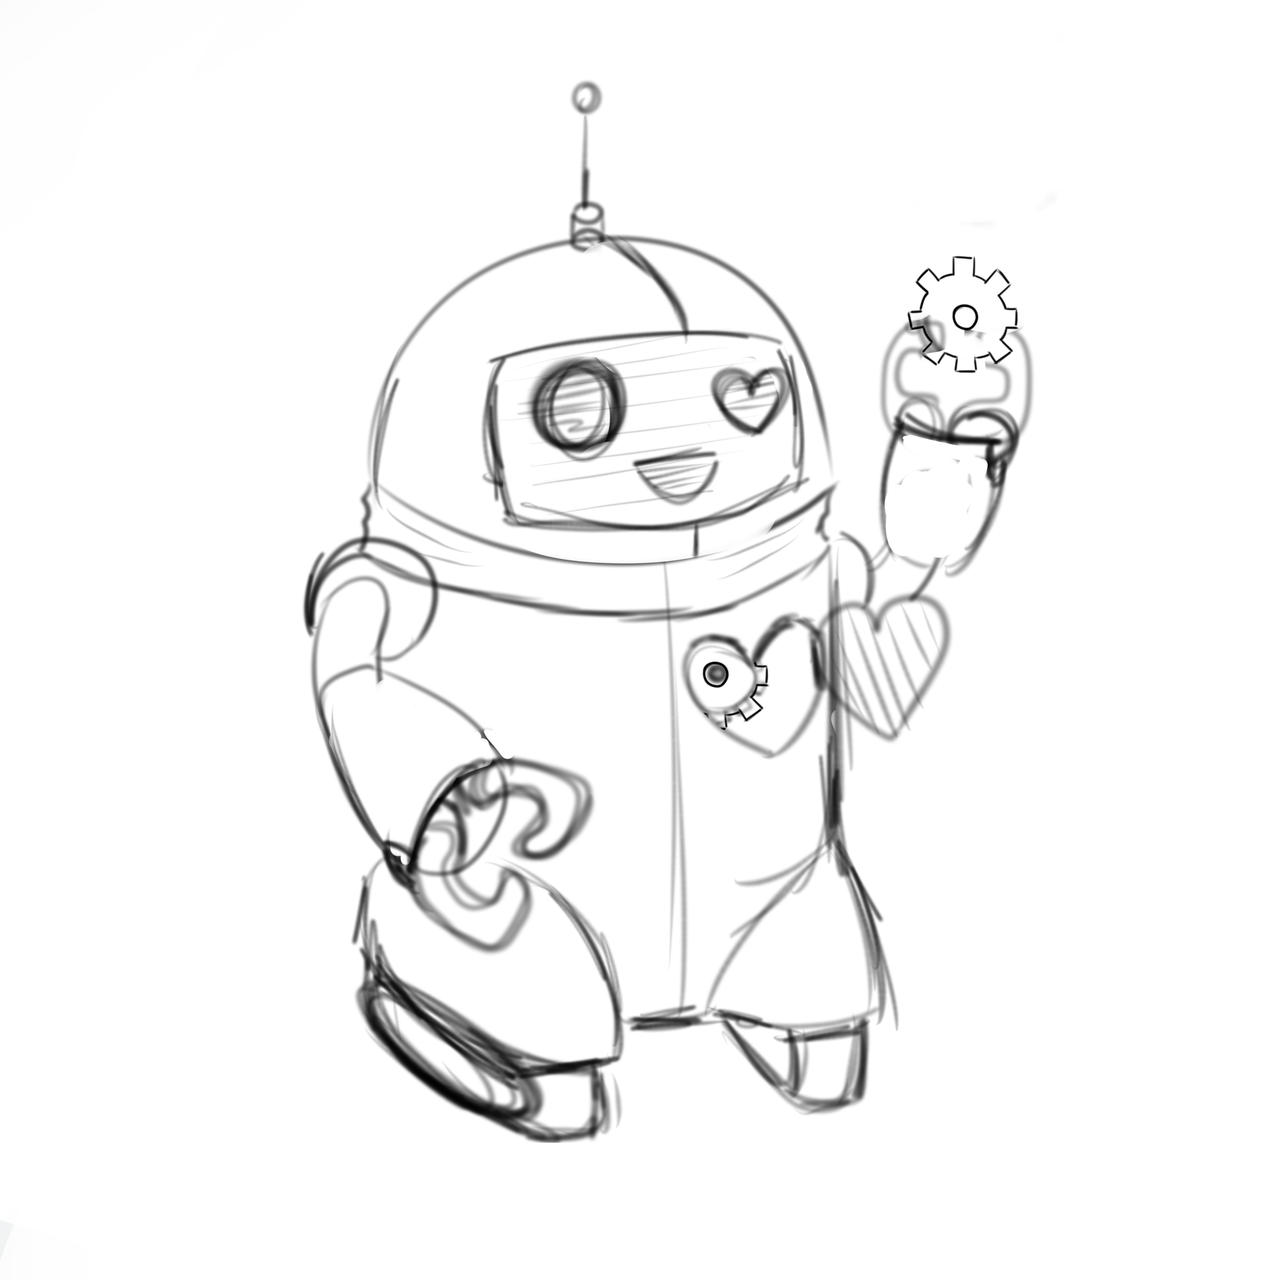 Overvåge Vugge Humanistisk My Cute Robot - 2021 (Sketch) by davidonzella on DeviantArt